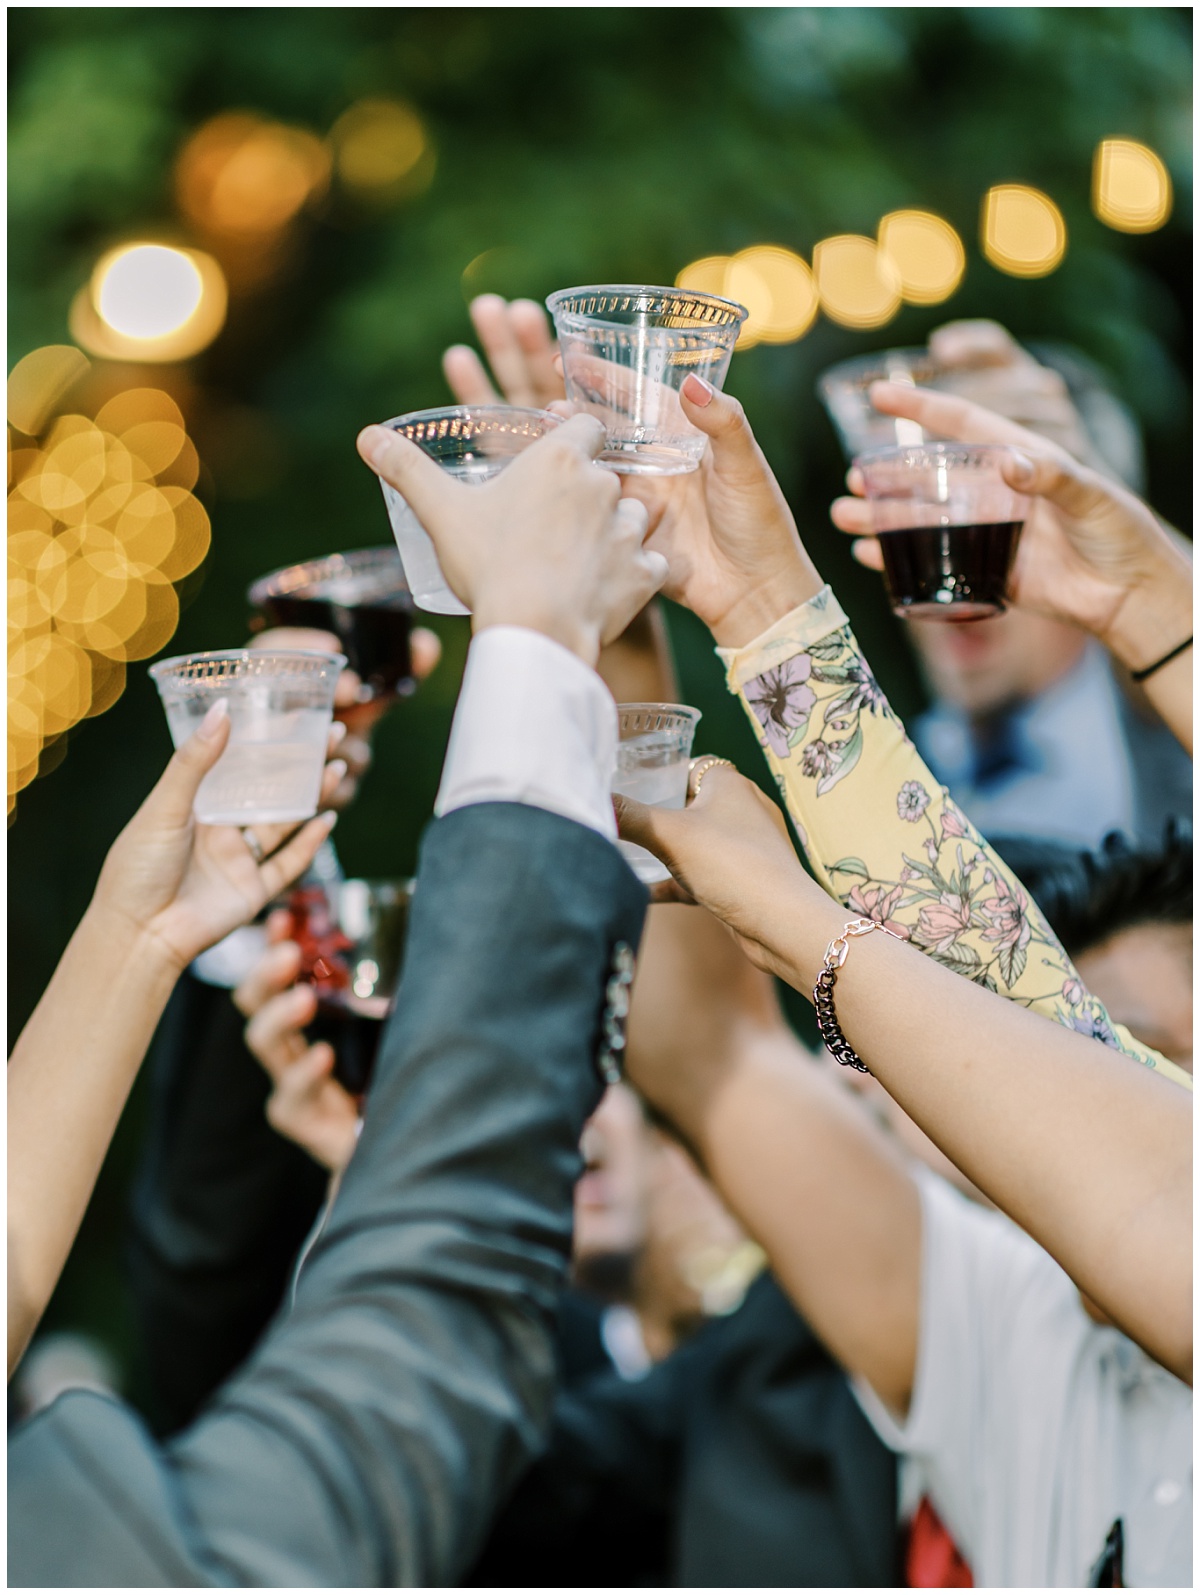 Wedding Speeches and Drinks